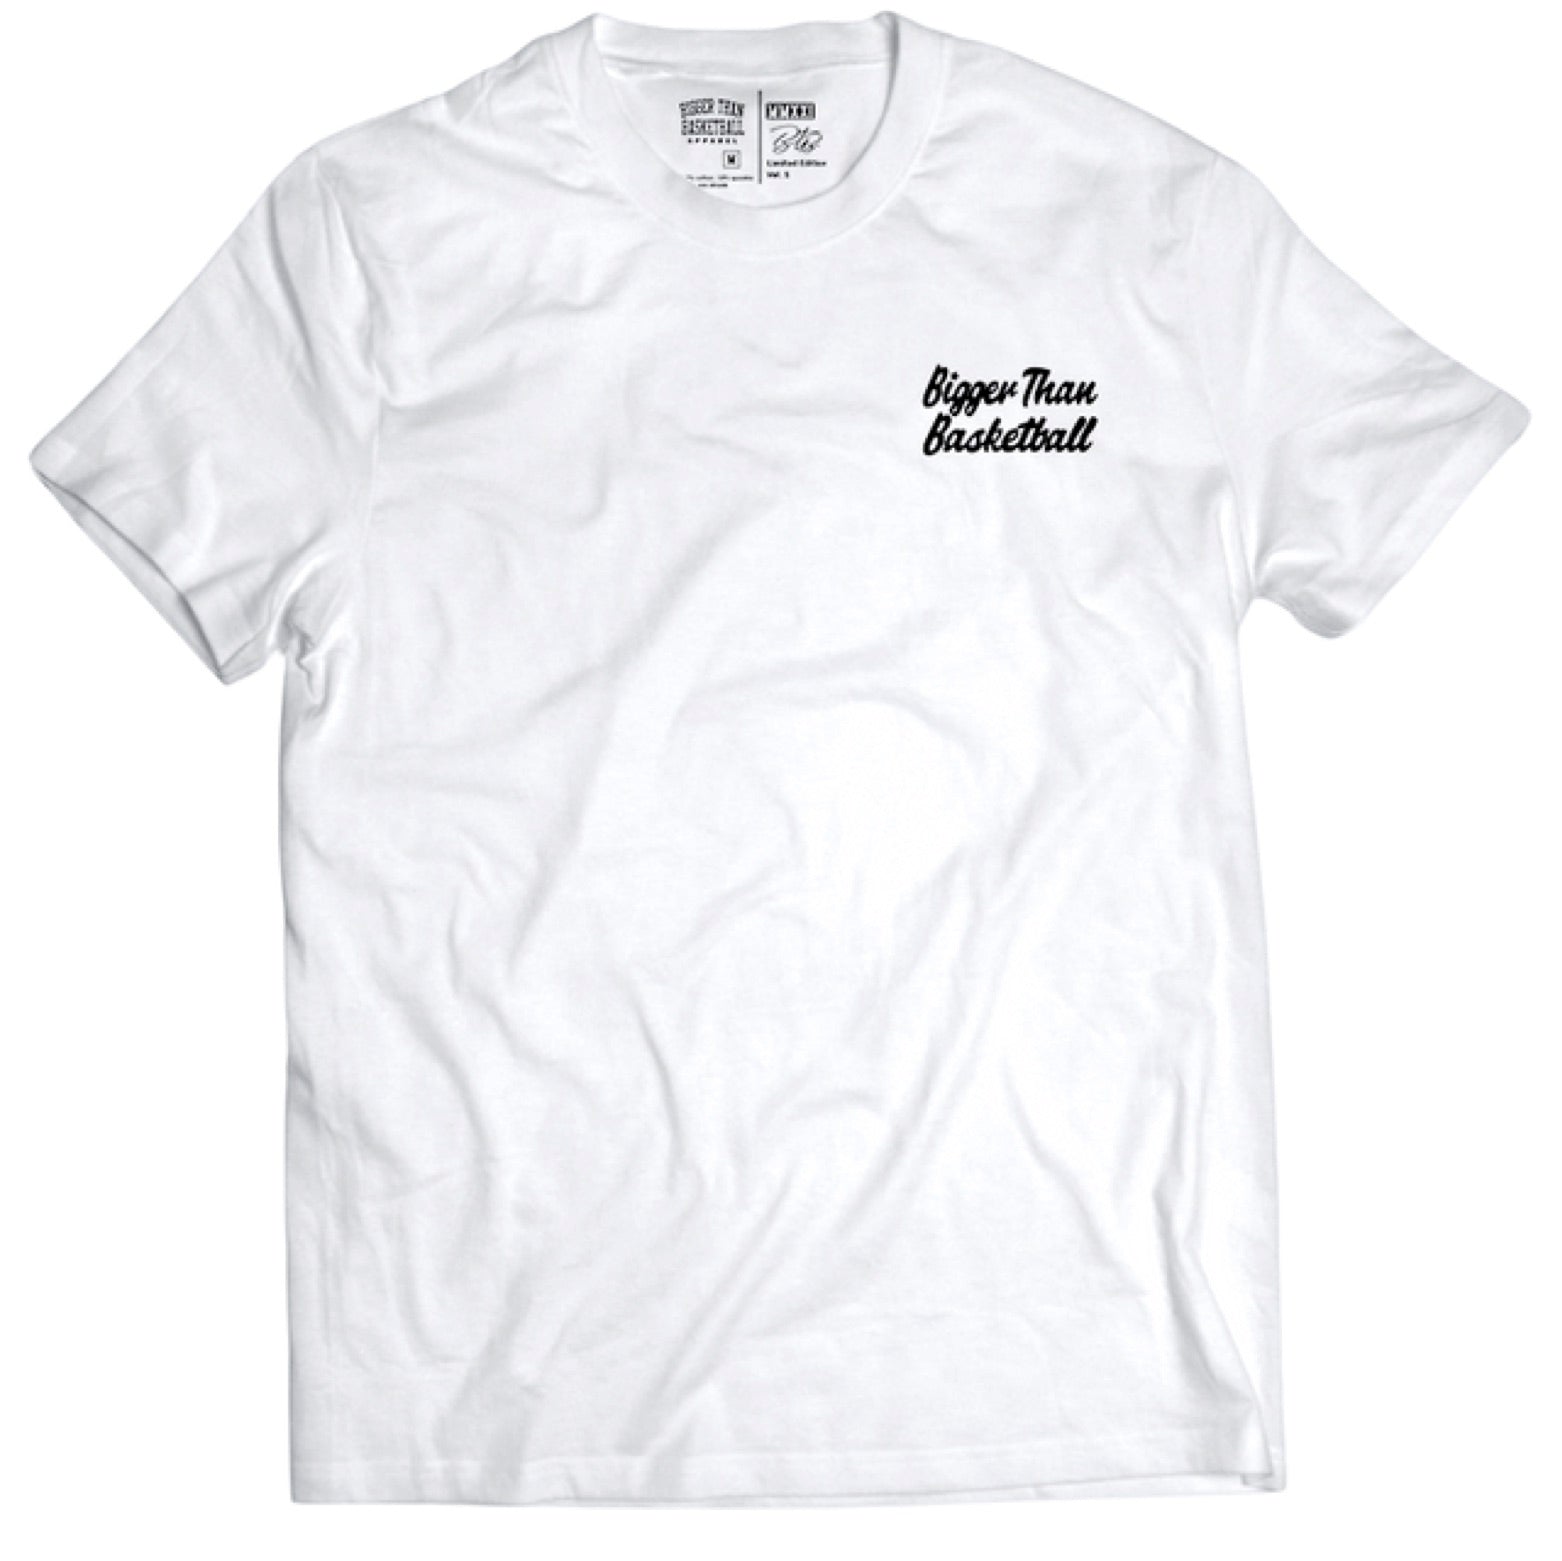 BTB Signature T-Shirt - White